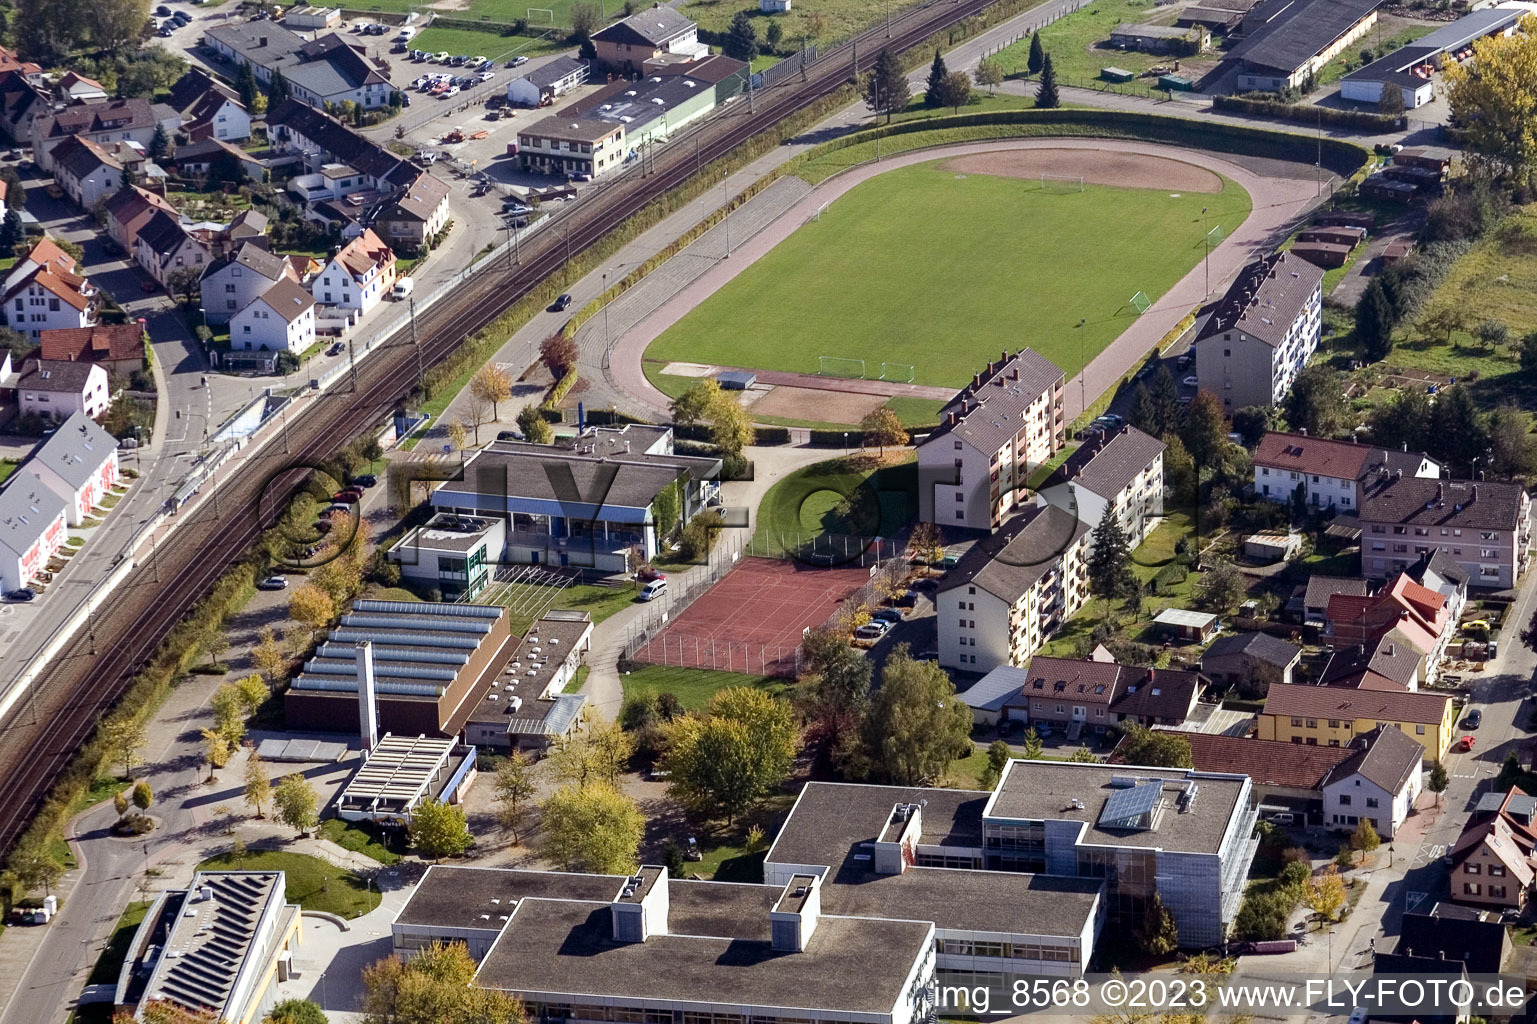 TSV Berghausen Stadium in the district Berghausen in Pfinztal in the state Baden-Wuerttemberg, Germany